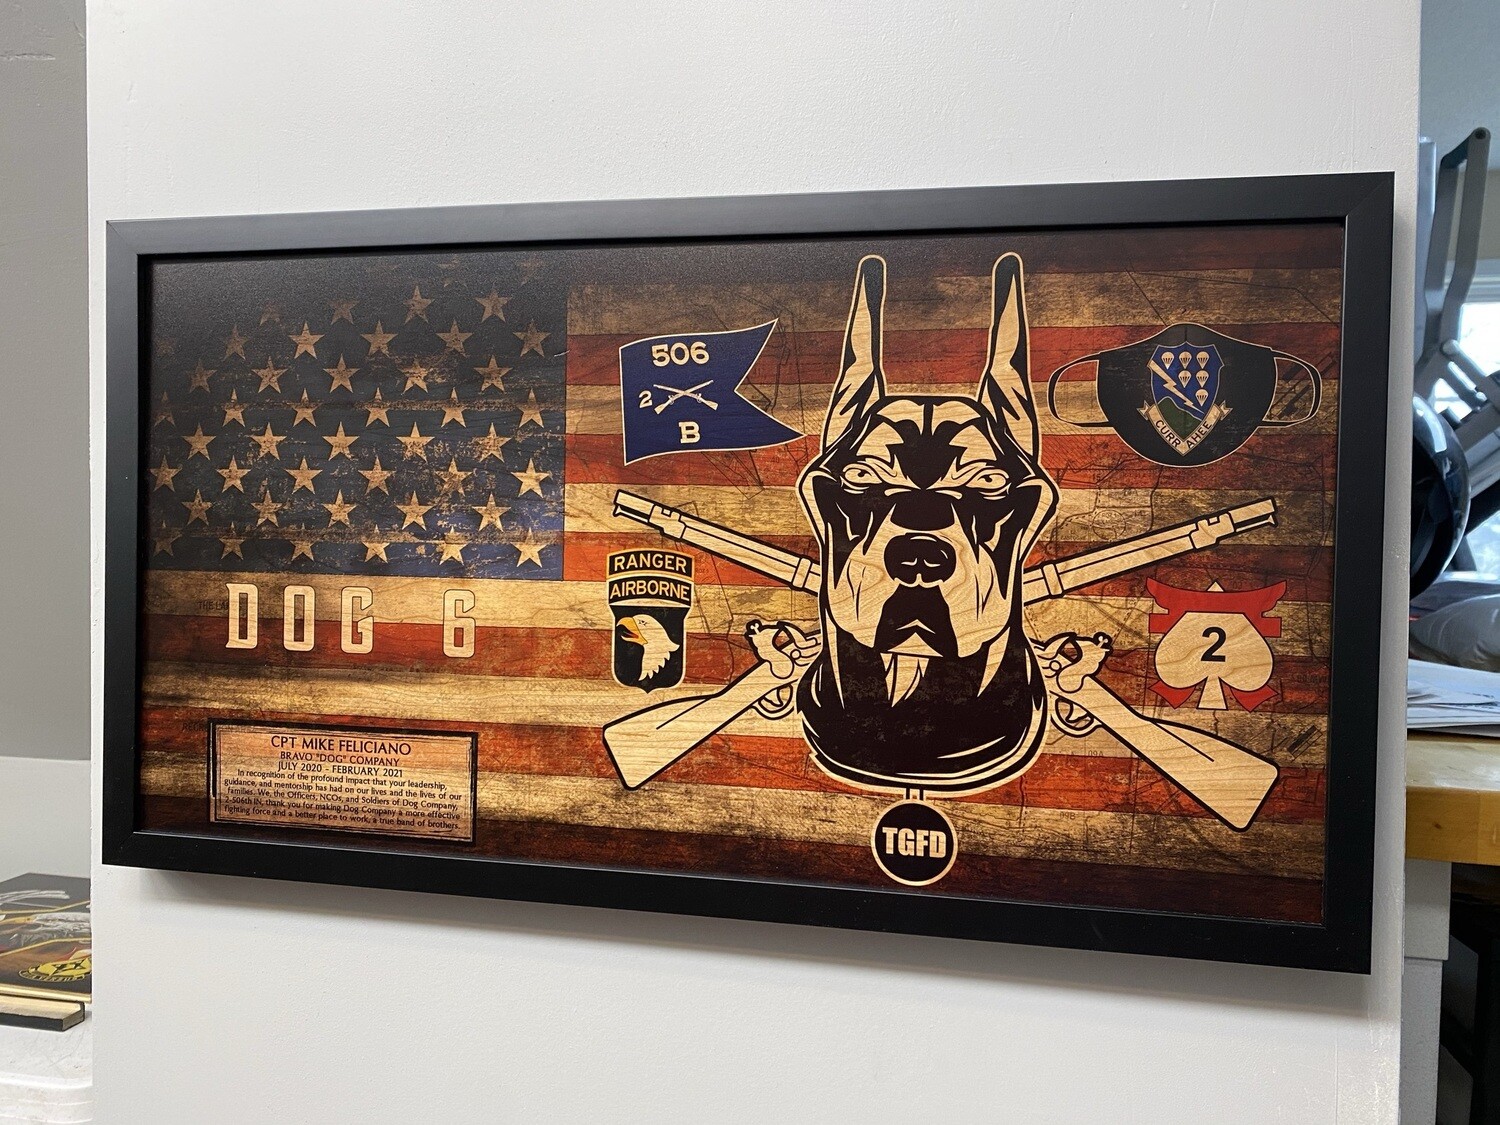 B Co "Dog" 2-506th Rustic Flag Plaque - 28.25"x15.25"